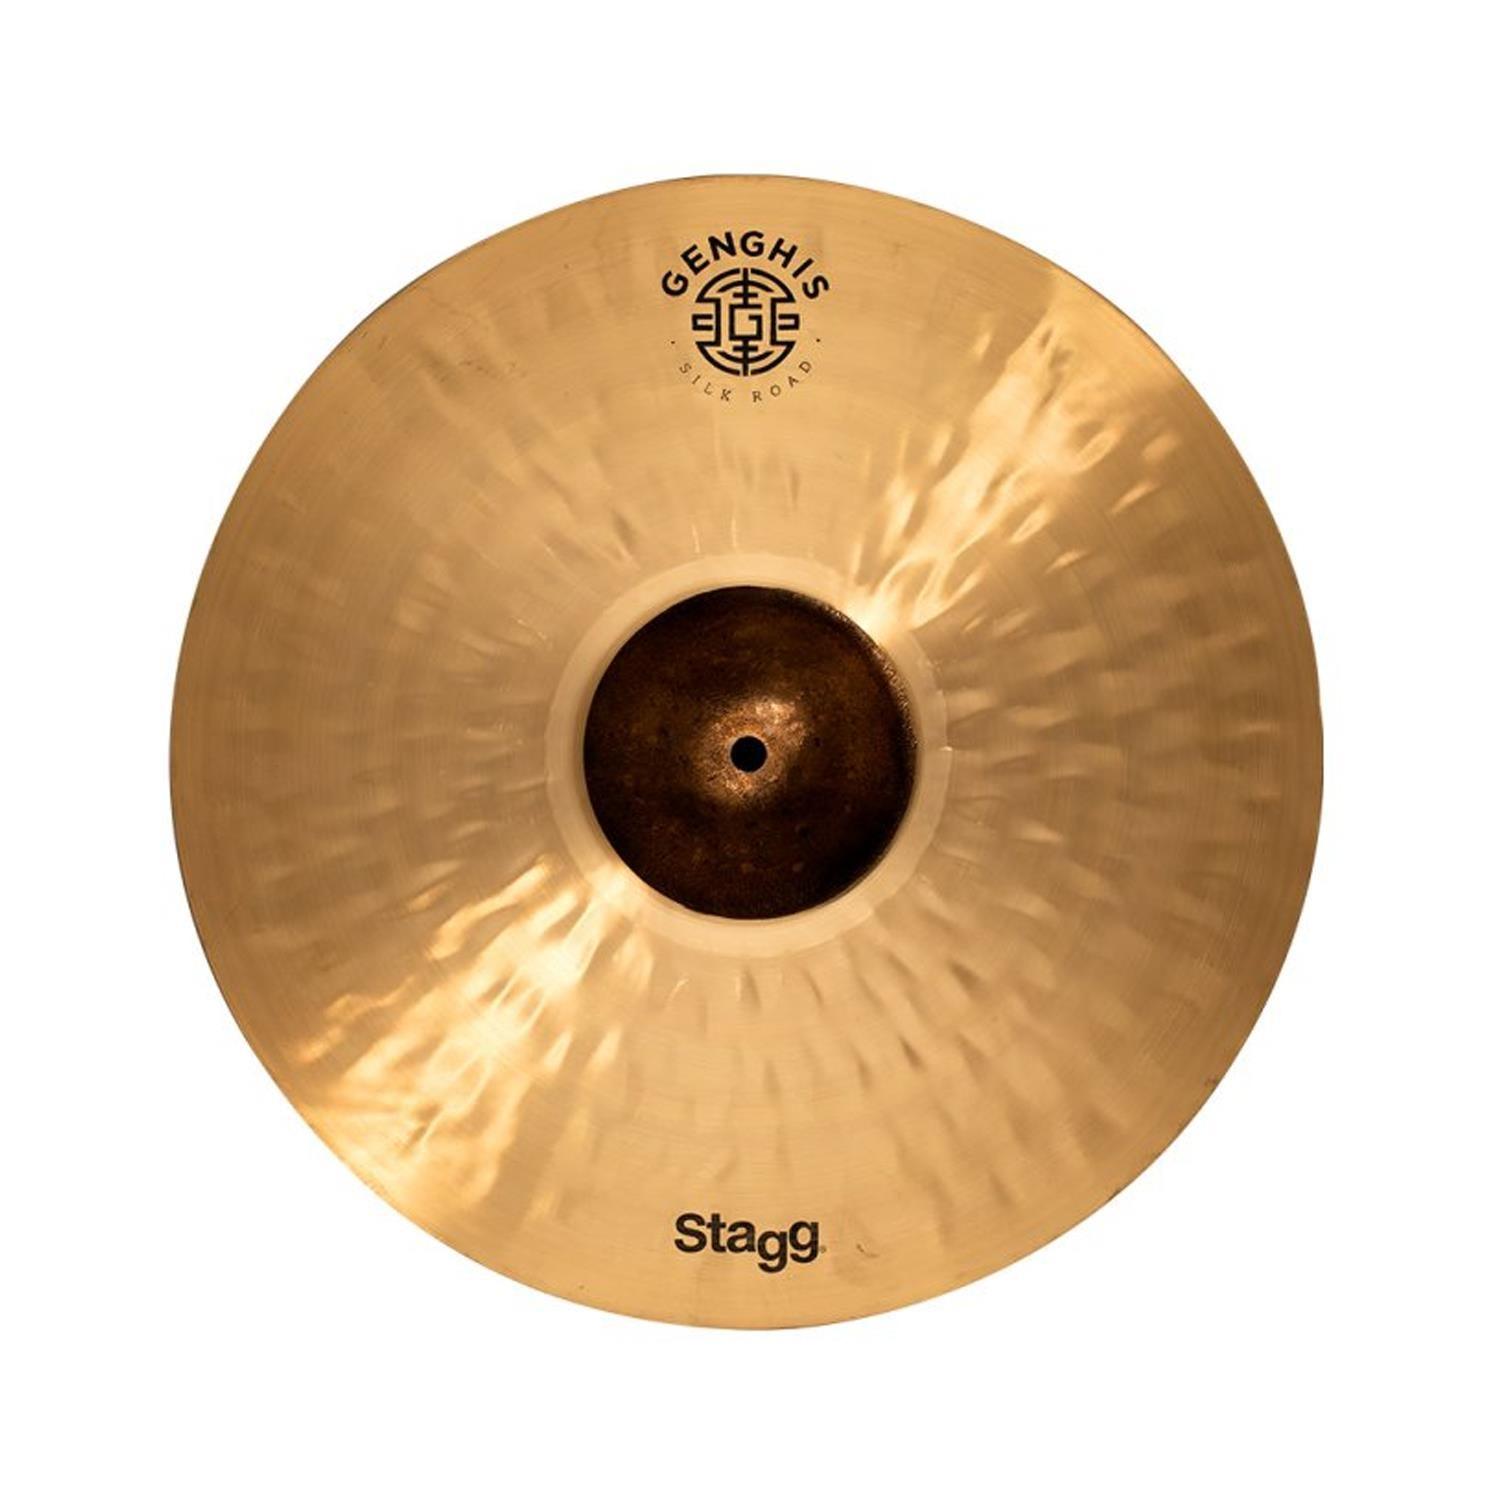 Stagg GENG-CM16E 16" Genghis Exo Medium Crash Cymbal - DY Pro Audio